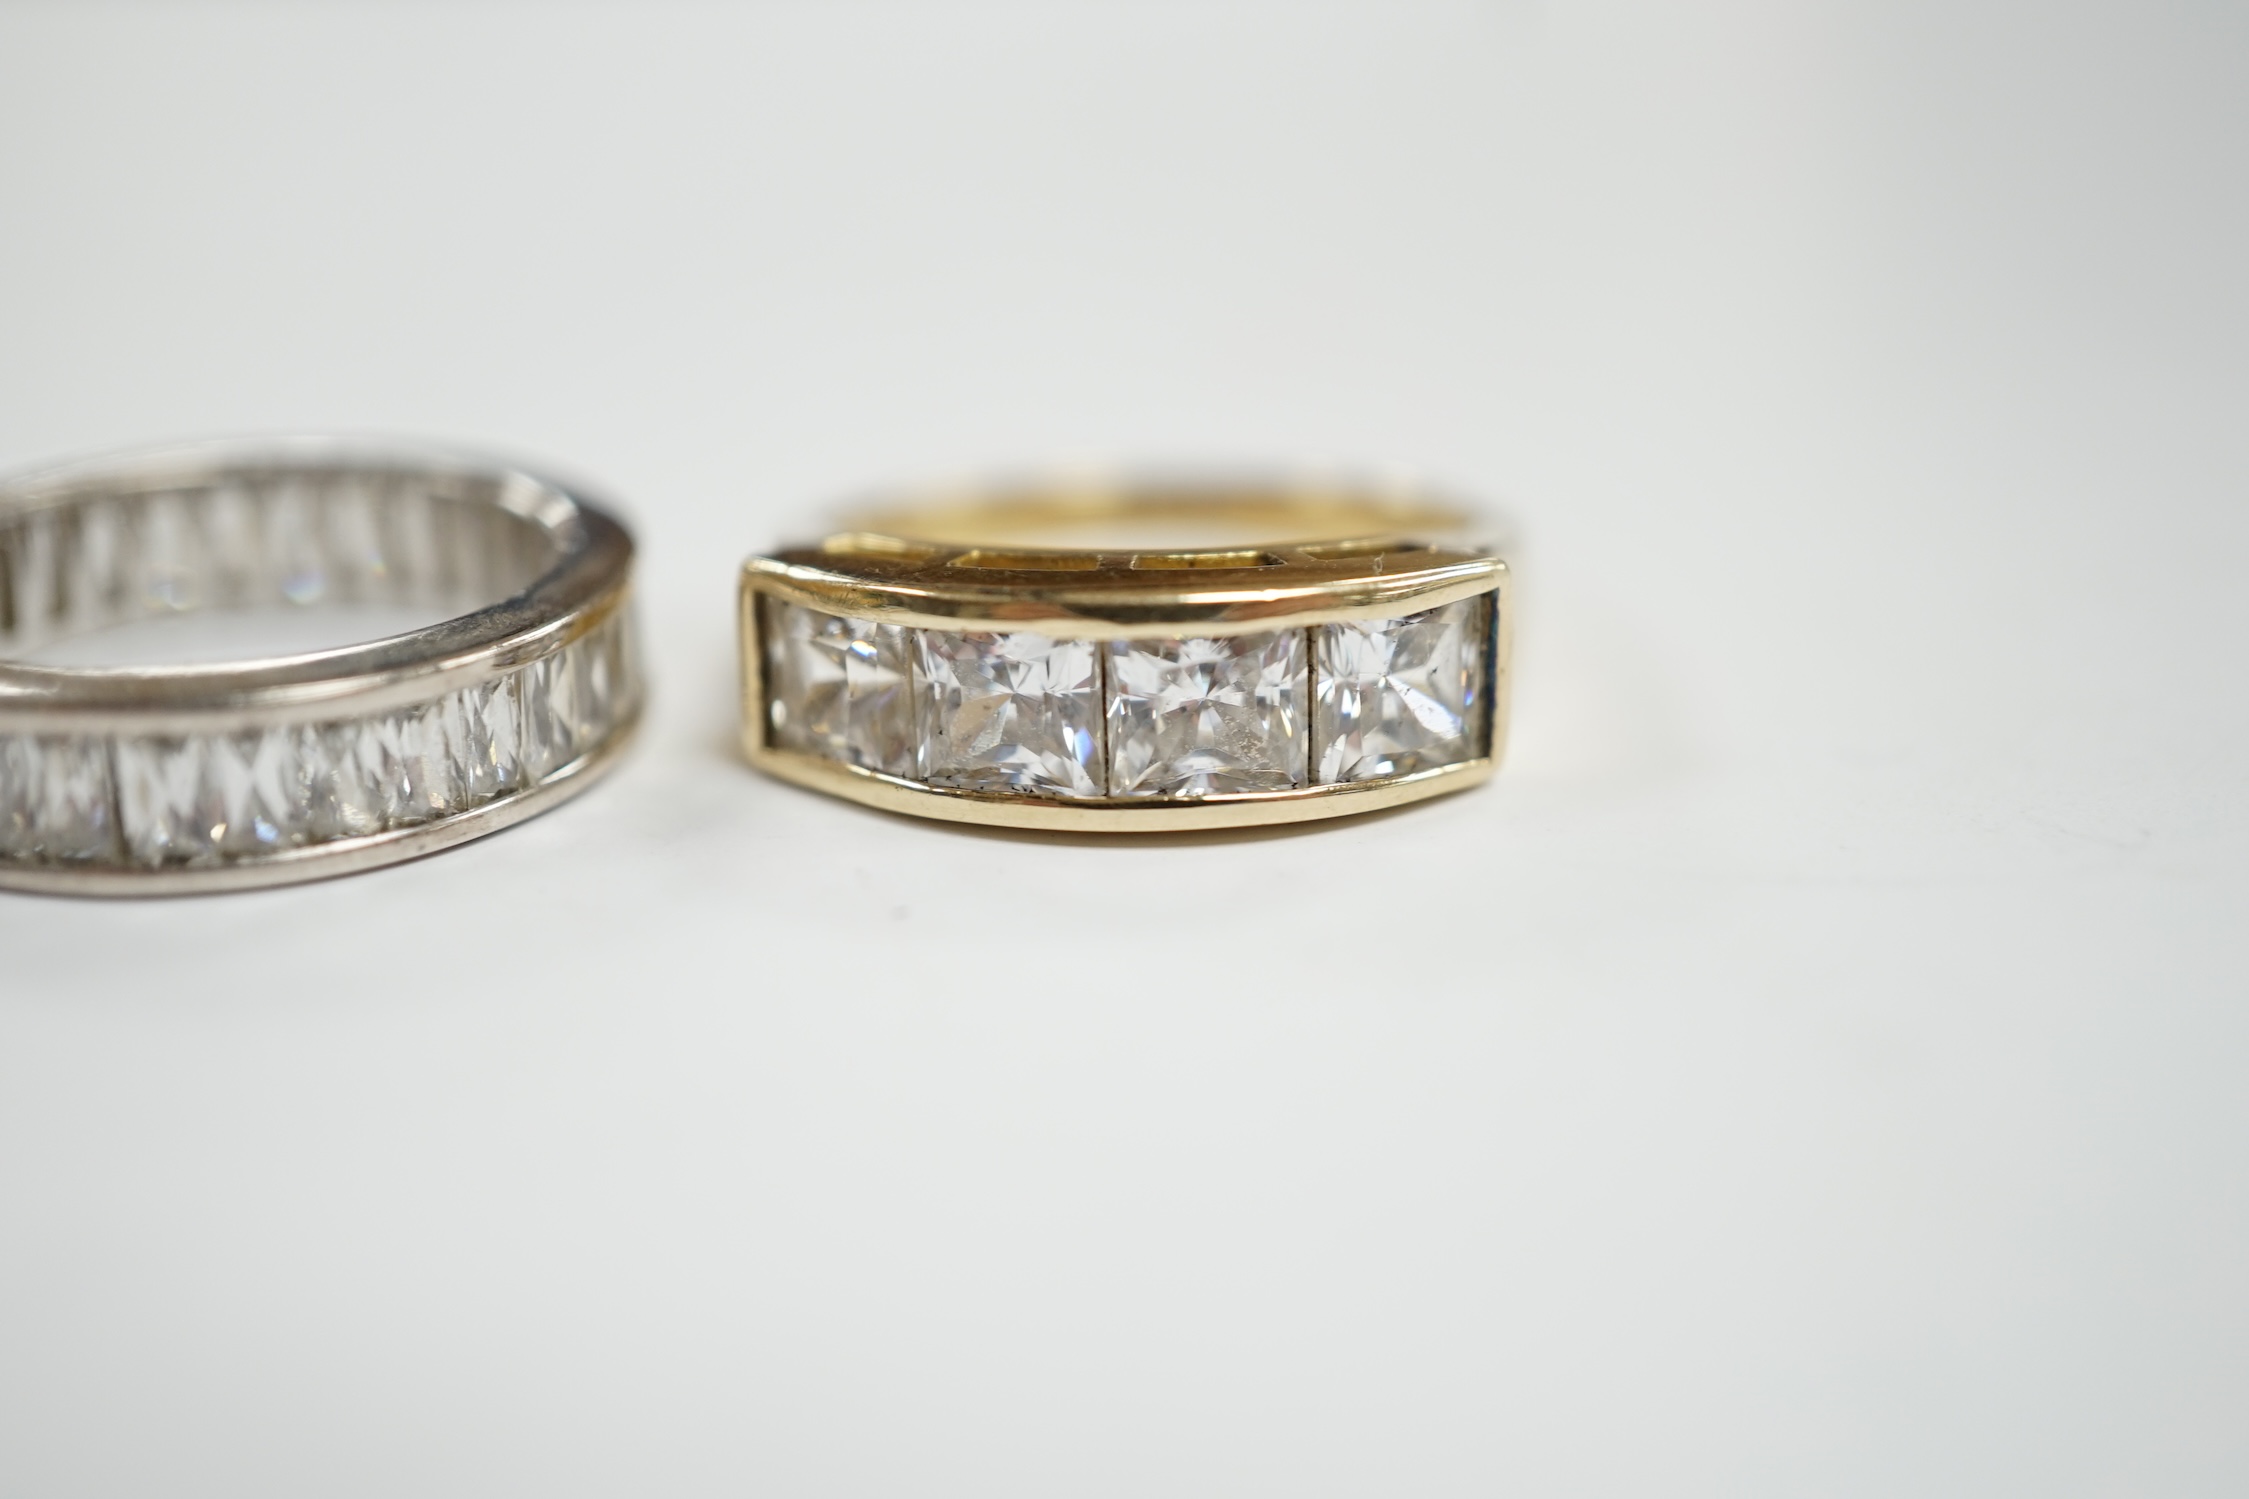 A 9k and simulated diamond set half hoop ring and a 925 and simulated diamond set eternity ring.